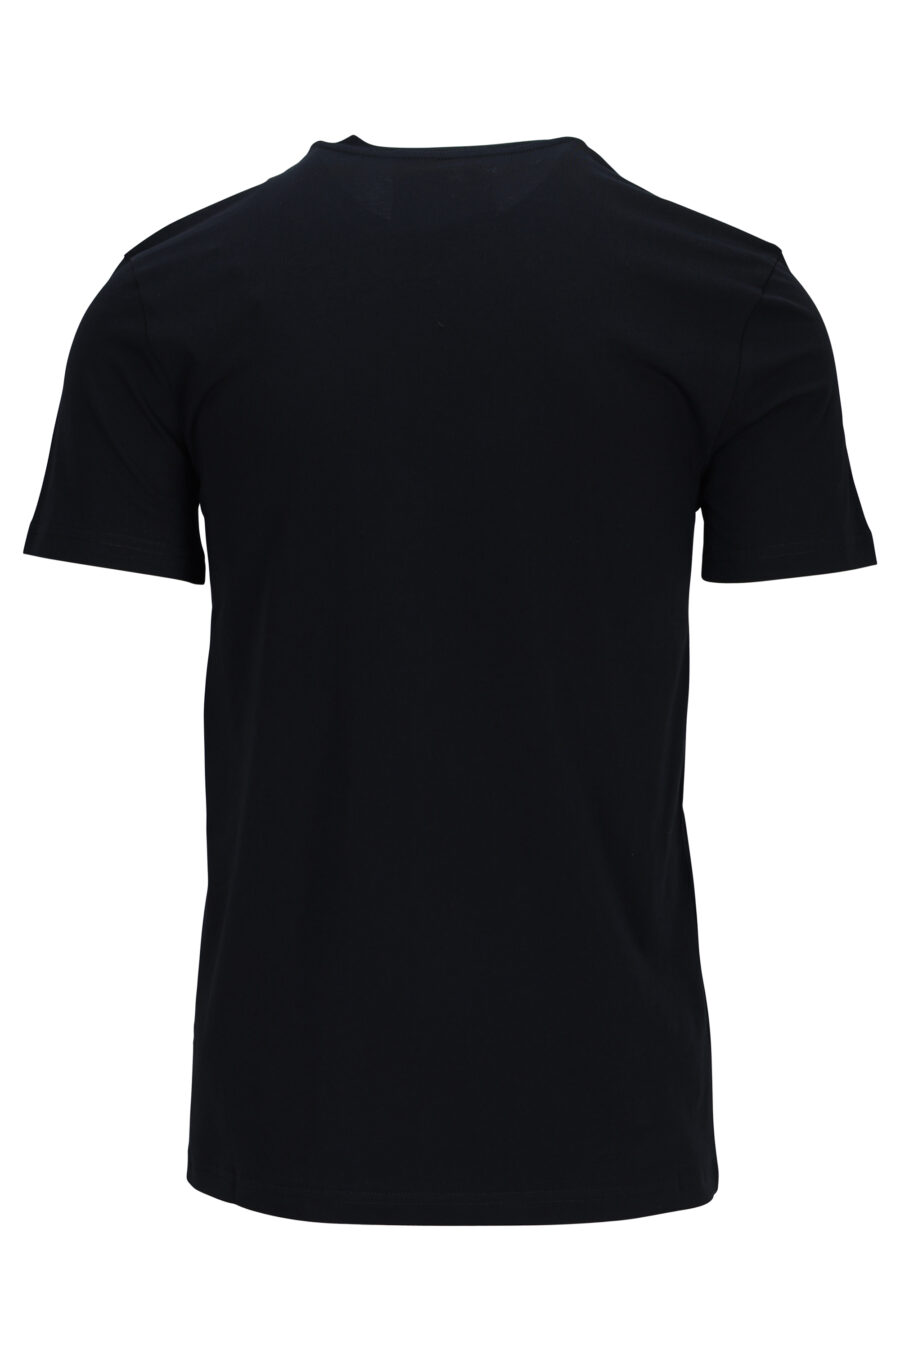 T-shirt noir avec maxilogue "couture milano" - 889316936551 1